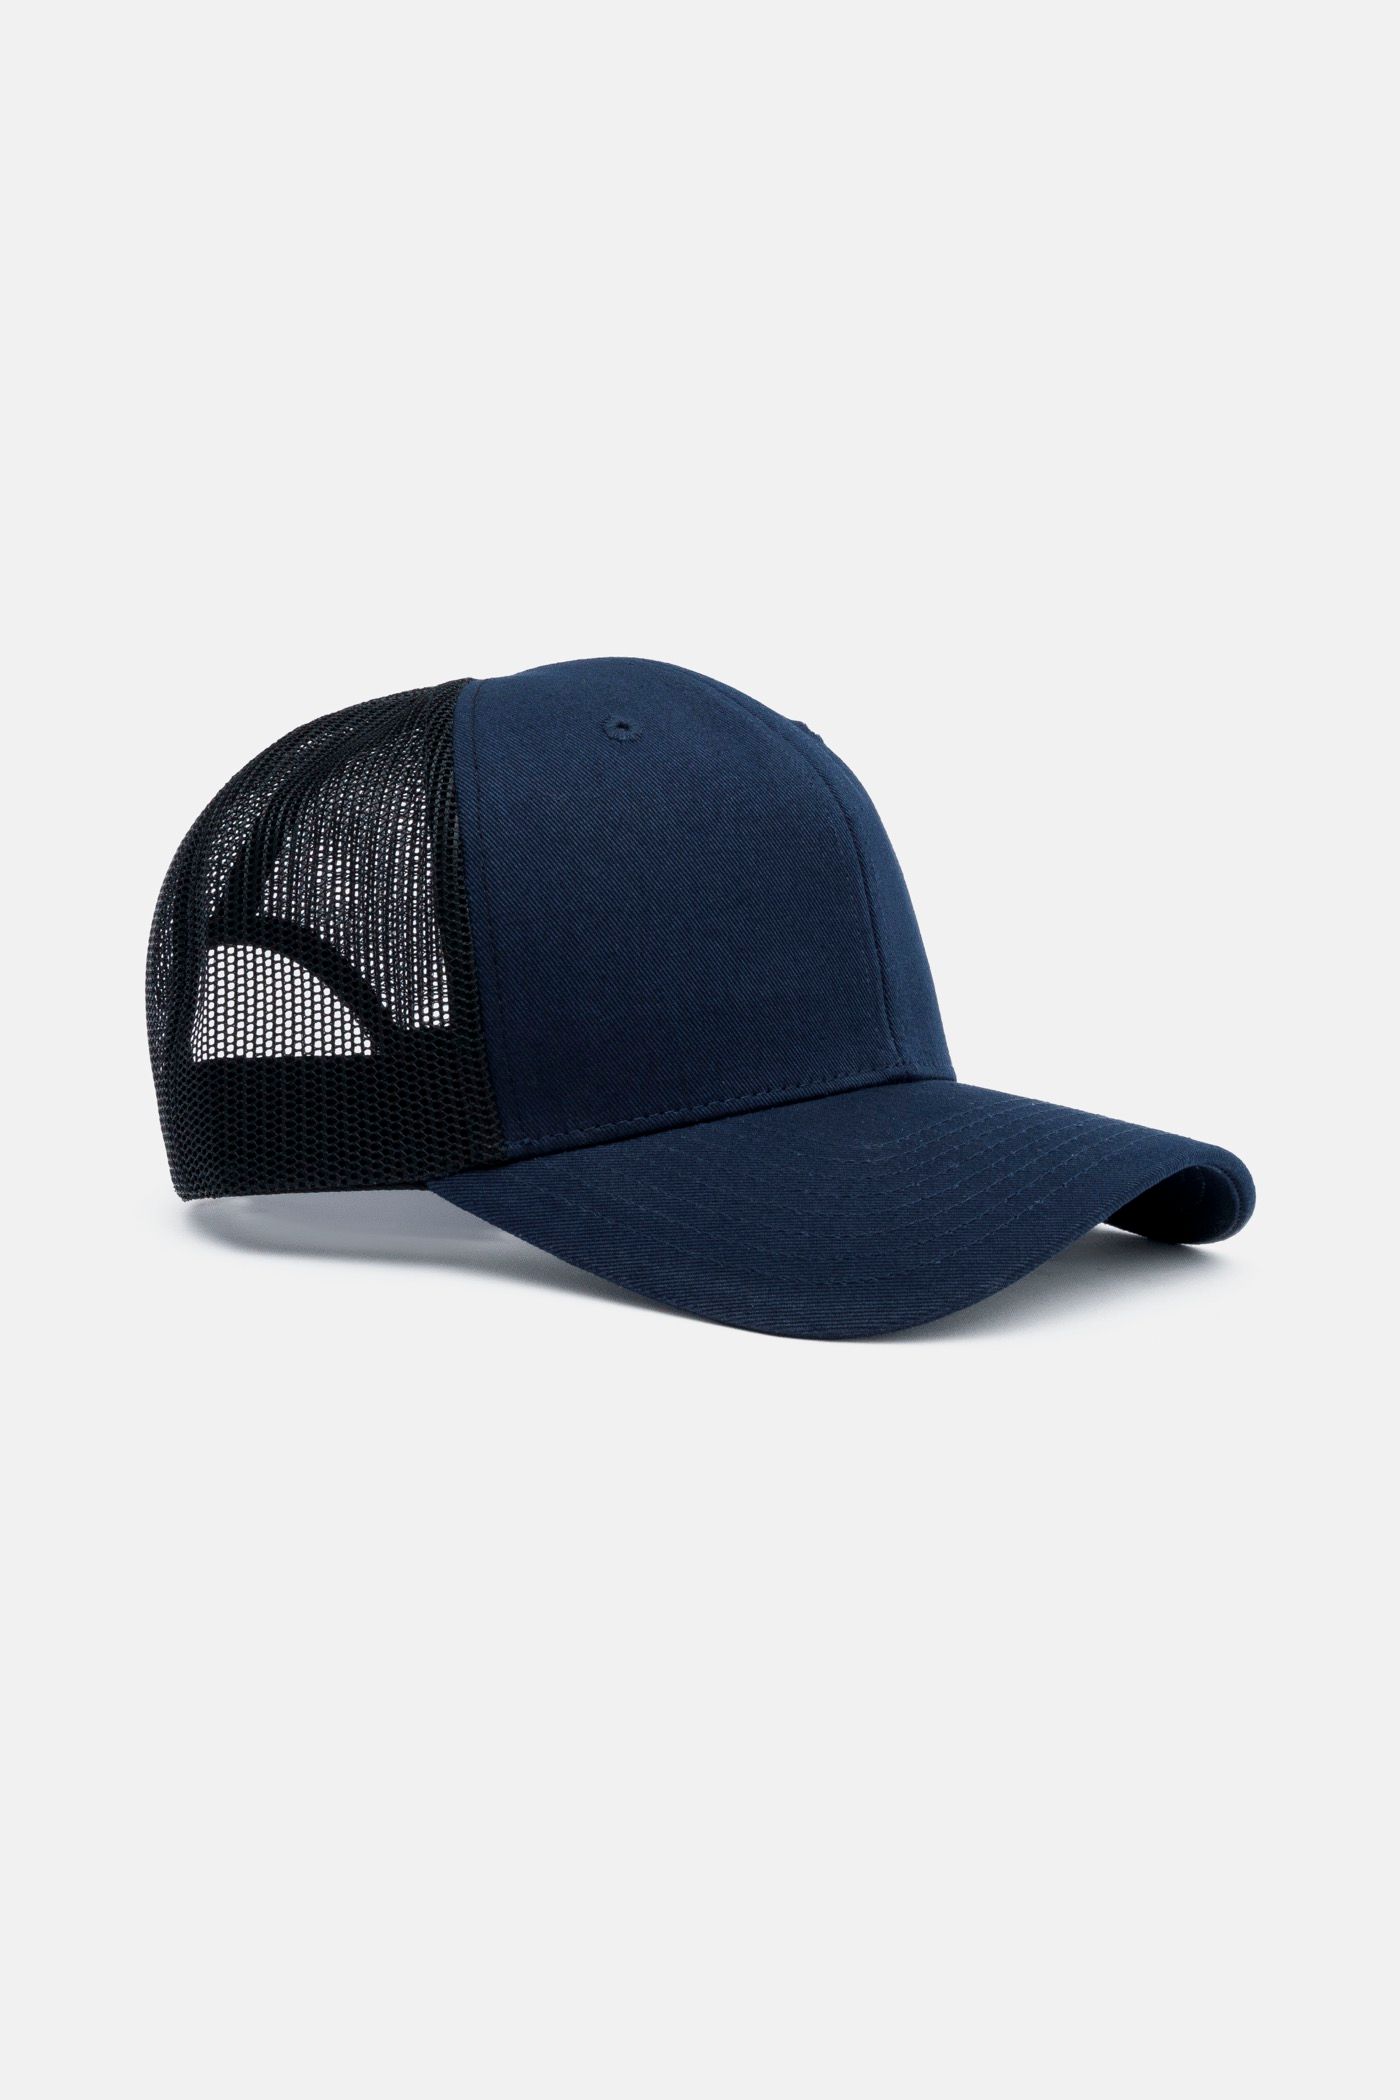 Proudly | Mũ/Nón lưới trai Baseball Cap  xanh-navy 4